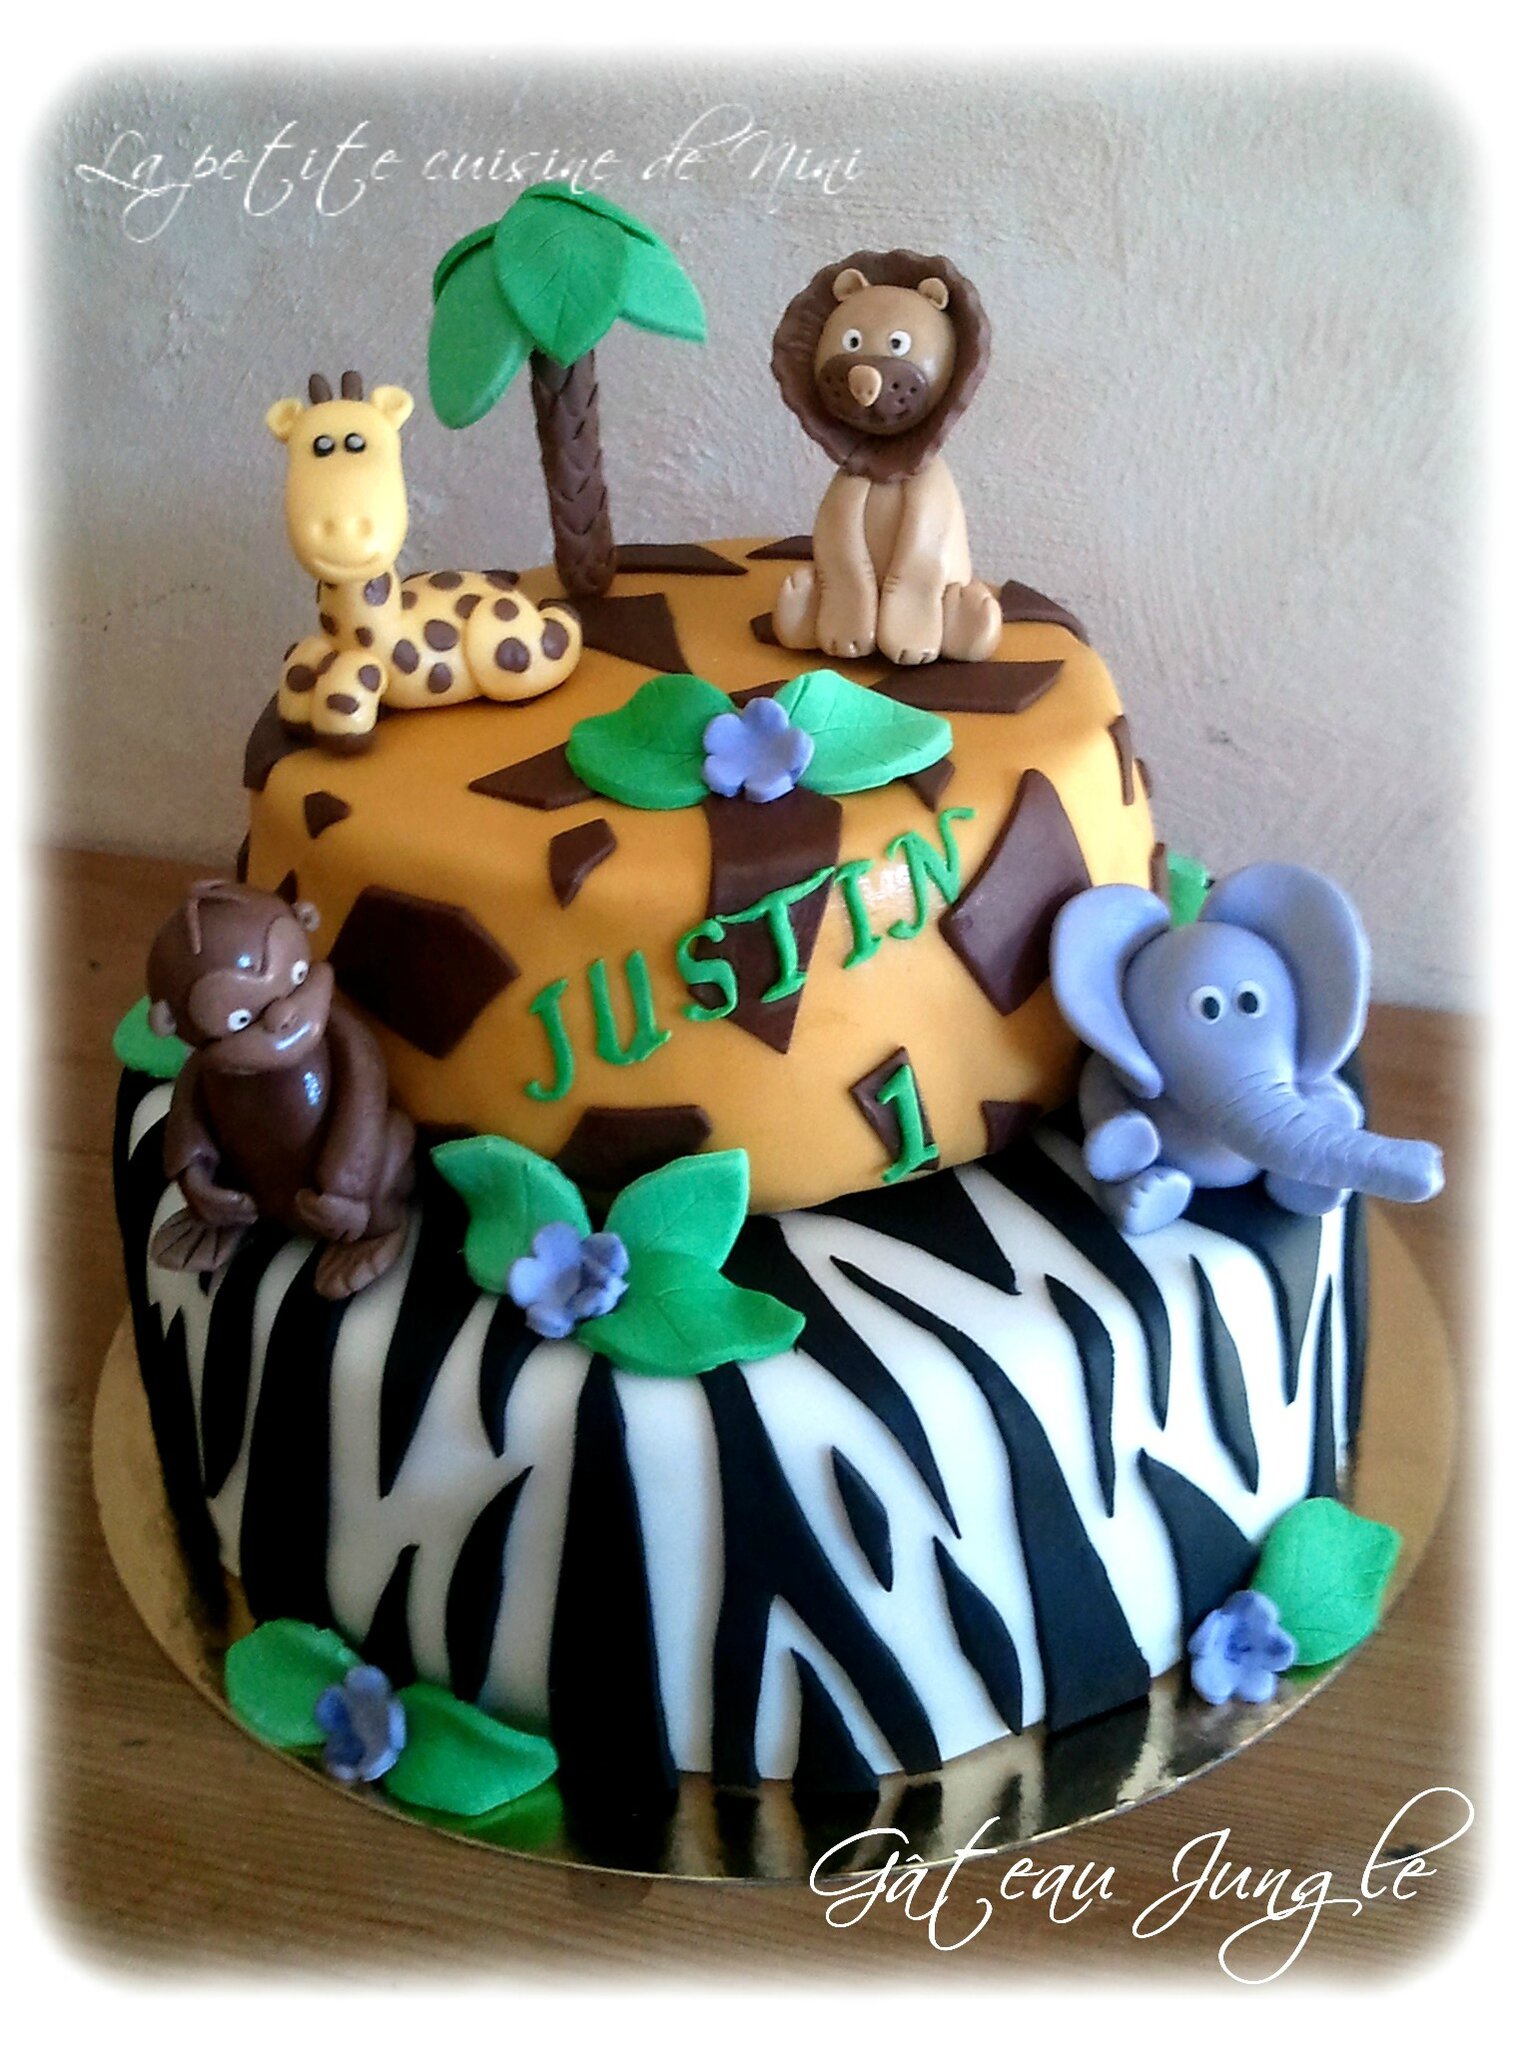 Gâteau d'anniversaire Jungle - La petite cuisine de Nini